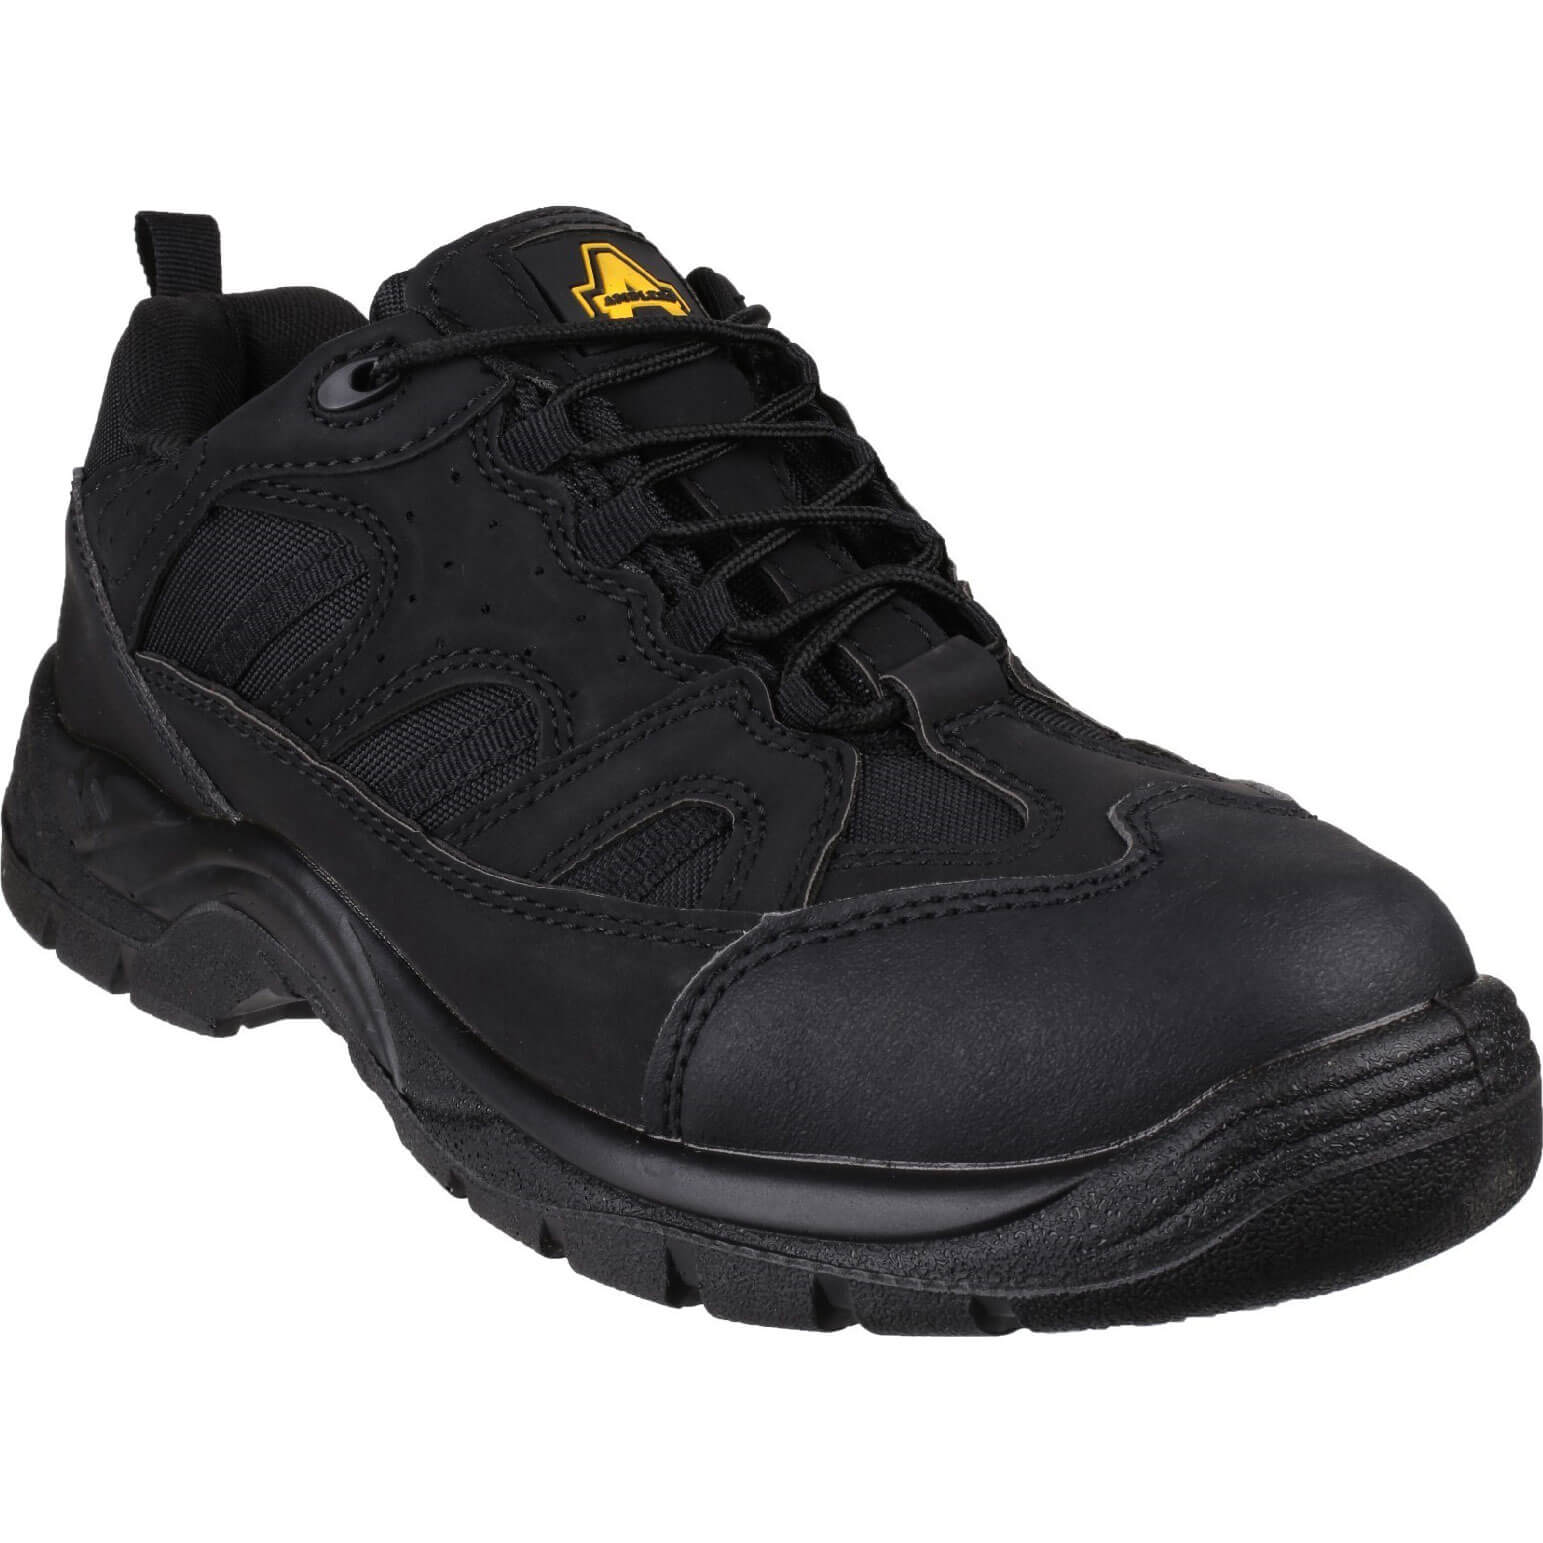 Image of Amblers Safety FS214 Vegan Friendly Safety Shoes Black Size 6